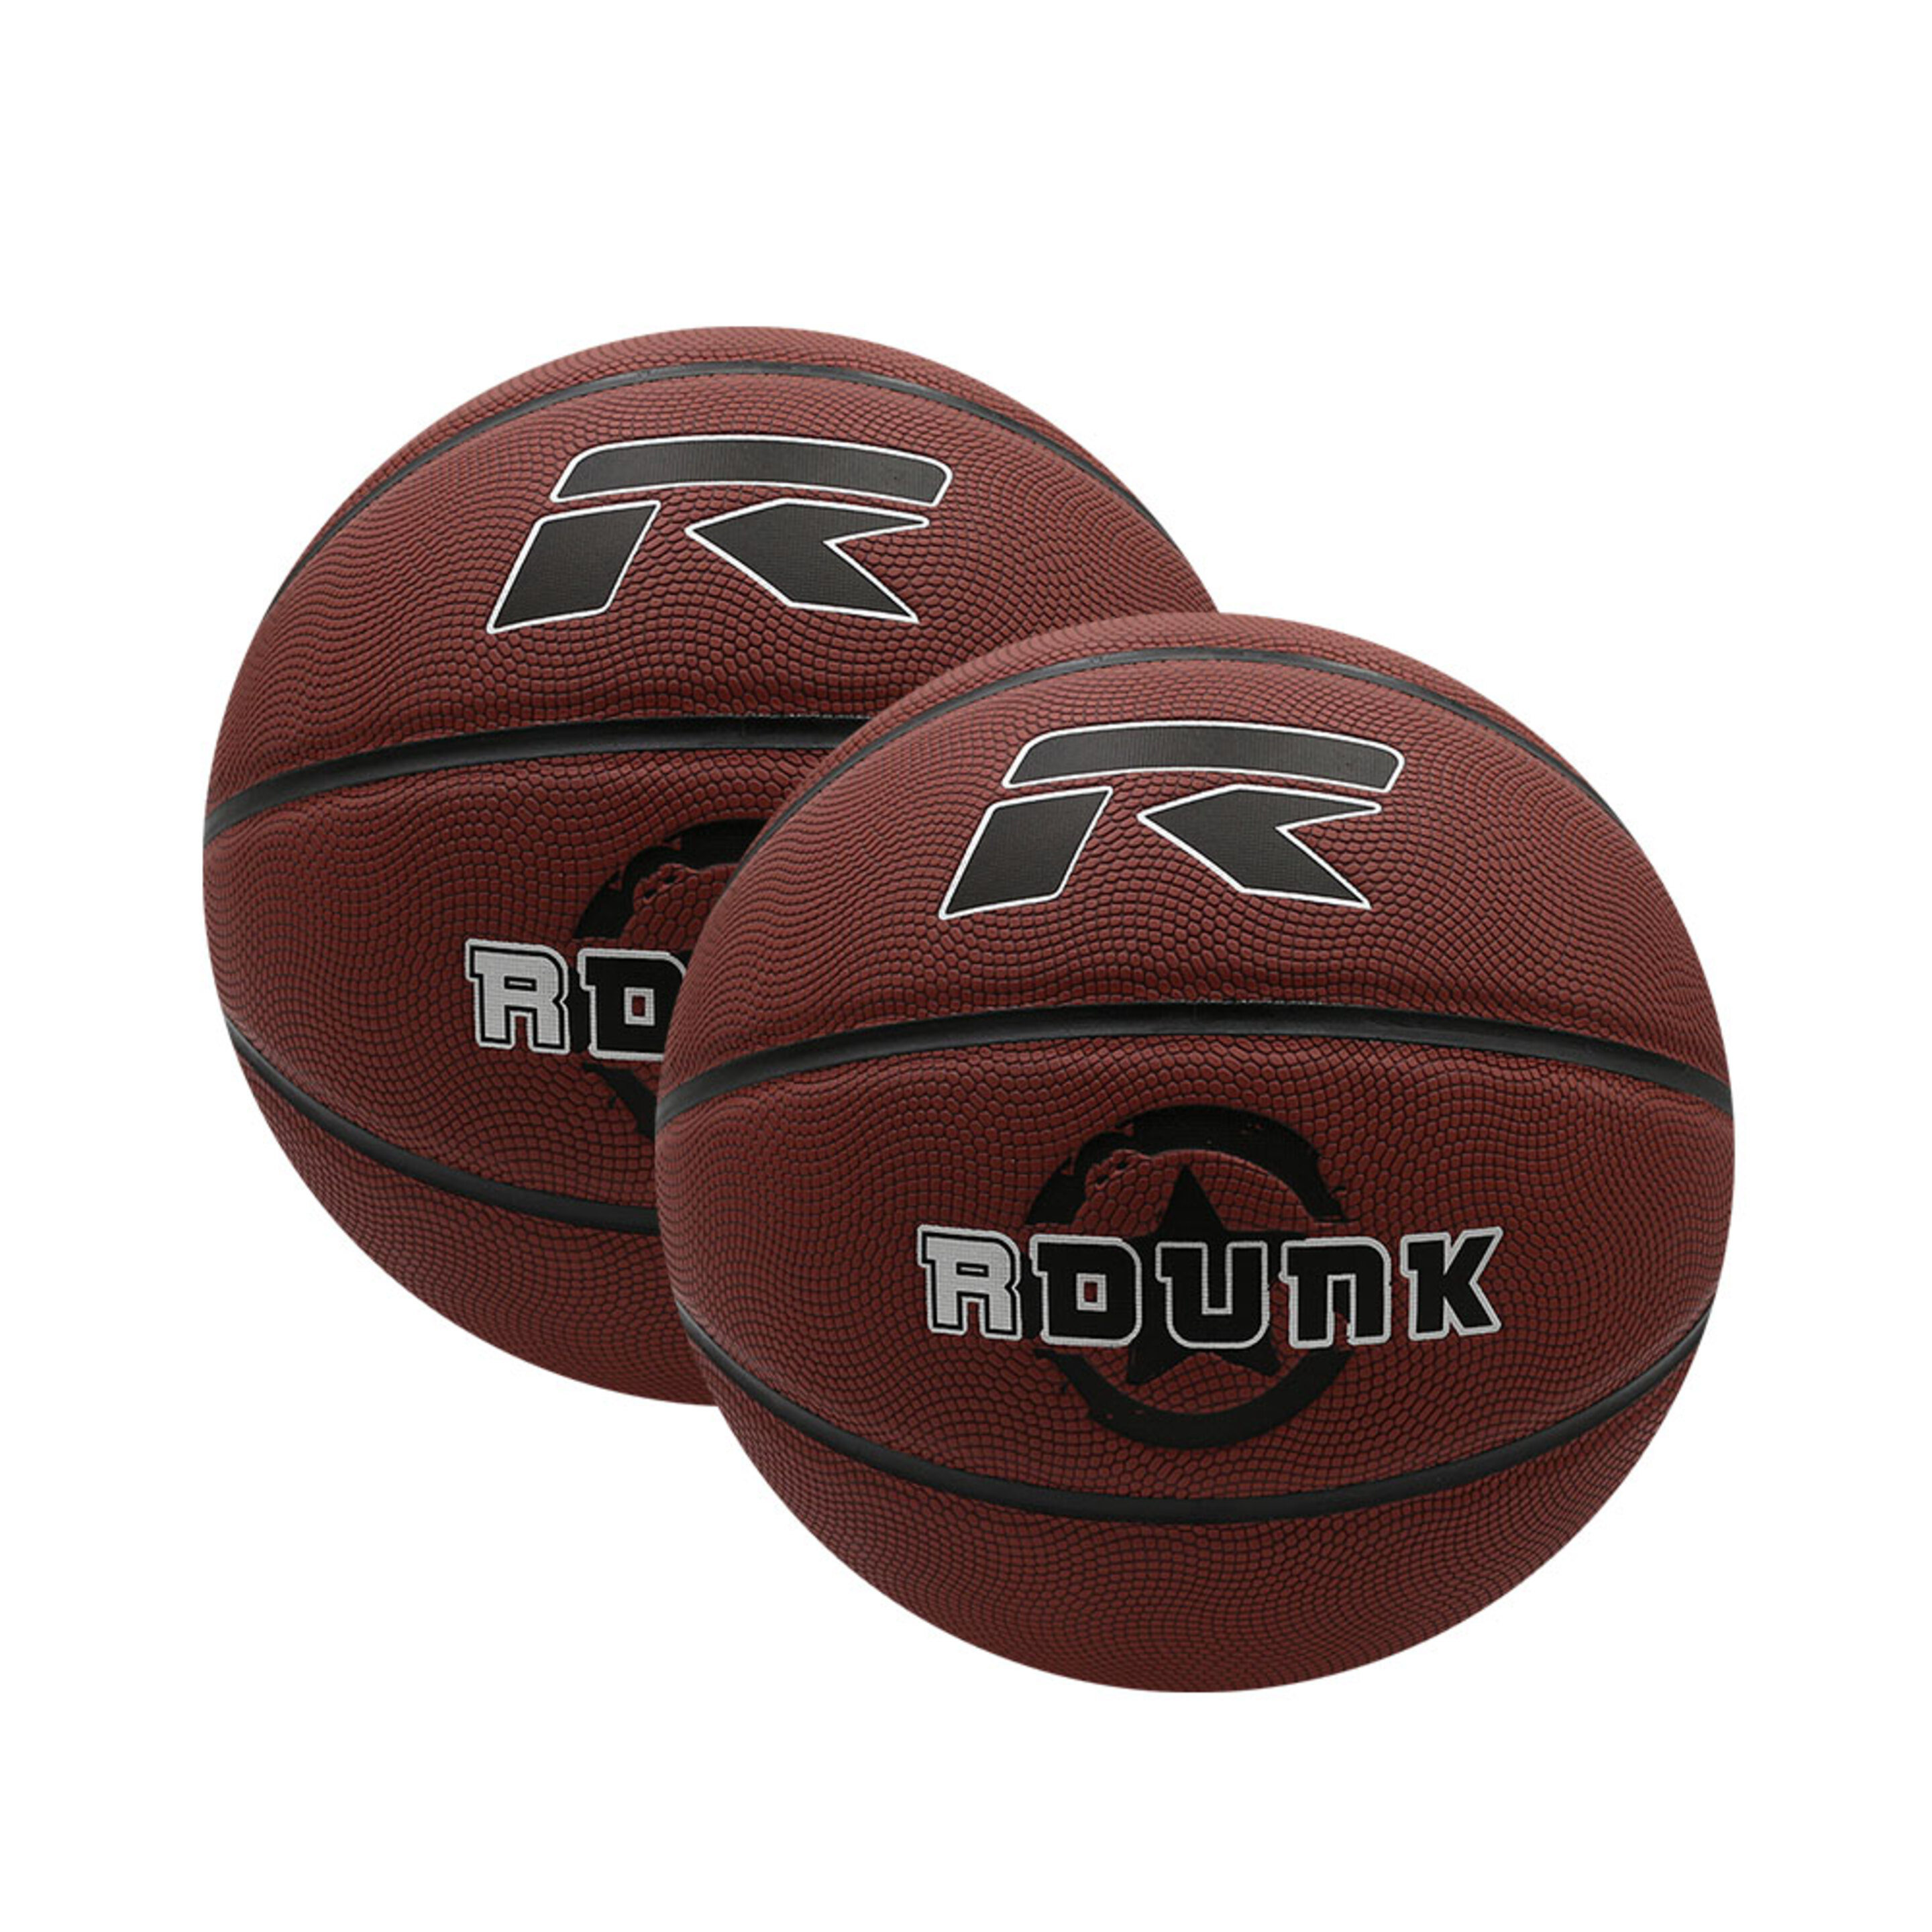 Lote 2 Balones Baloncesto  Rox "r-dunk "